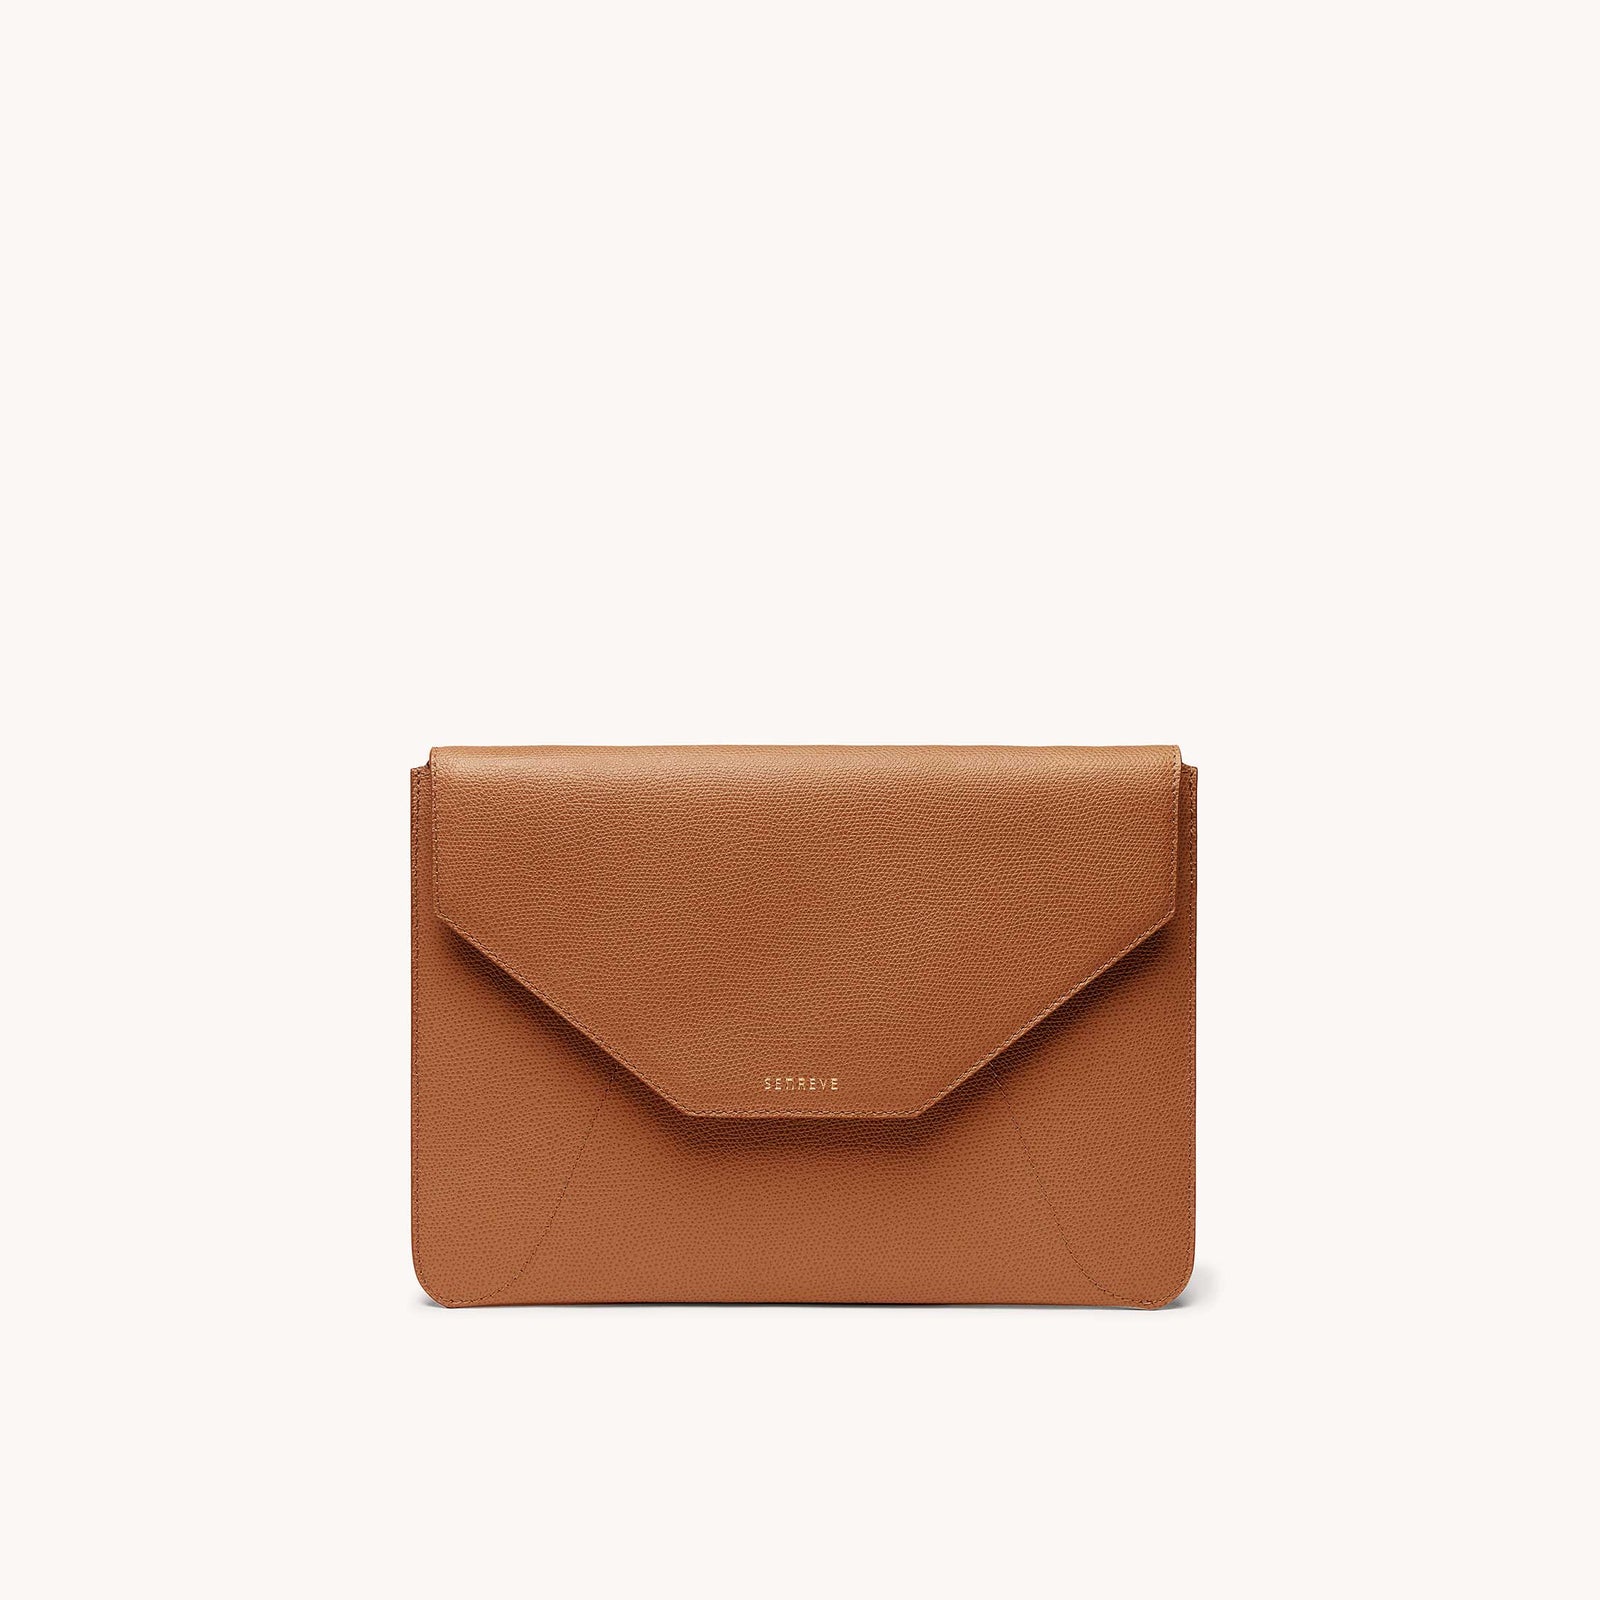 SENREVE Maestra Bag: Luxury Leather Handbag - Made in Italy